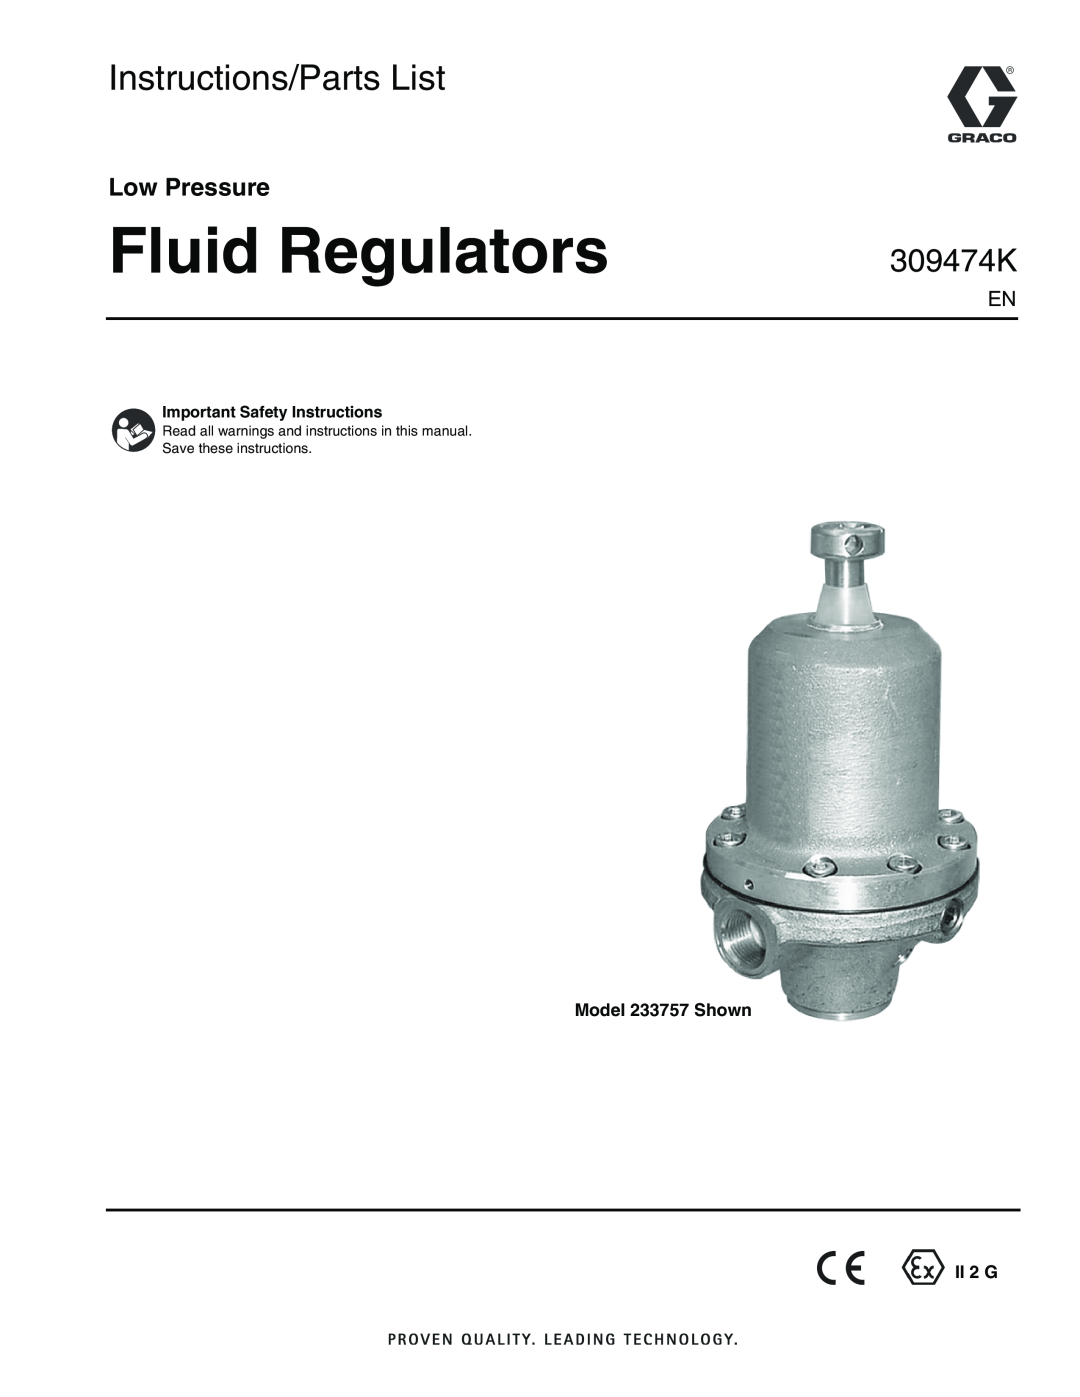 Graco Inc 233757 important safety instructions Low Pressure, Fluid Regulators, Instructions/Parts List, 309474K 